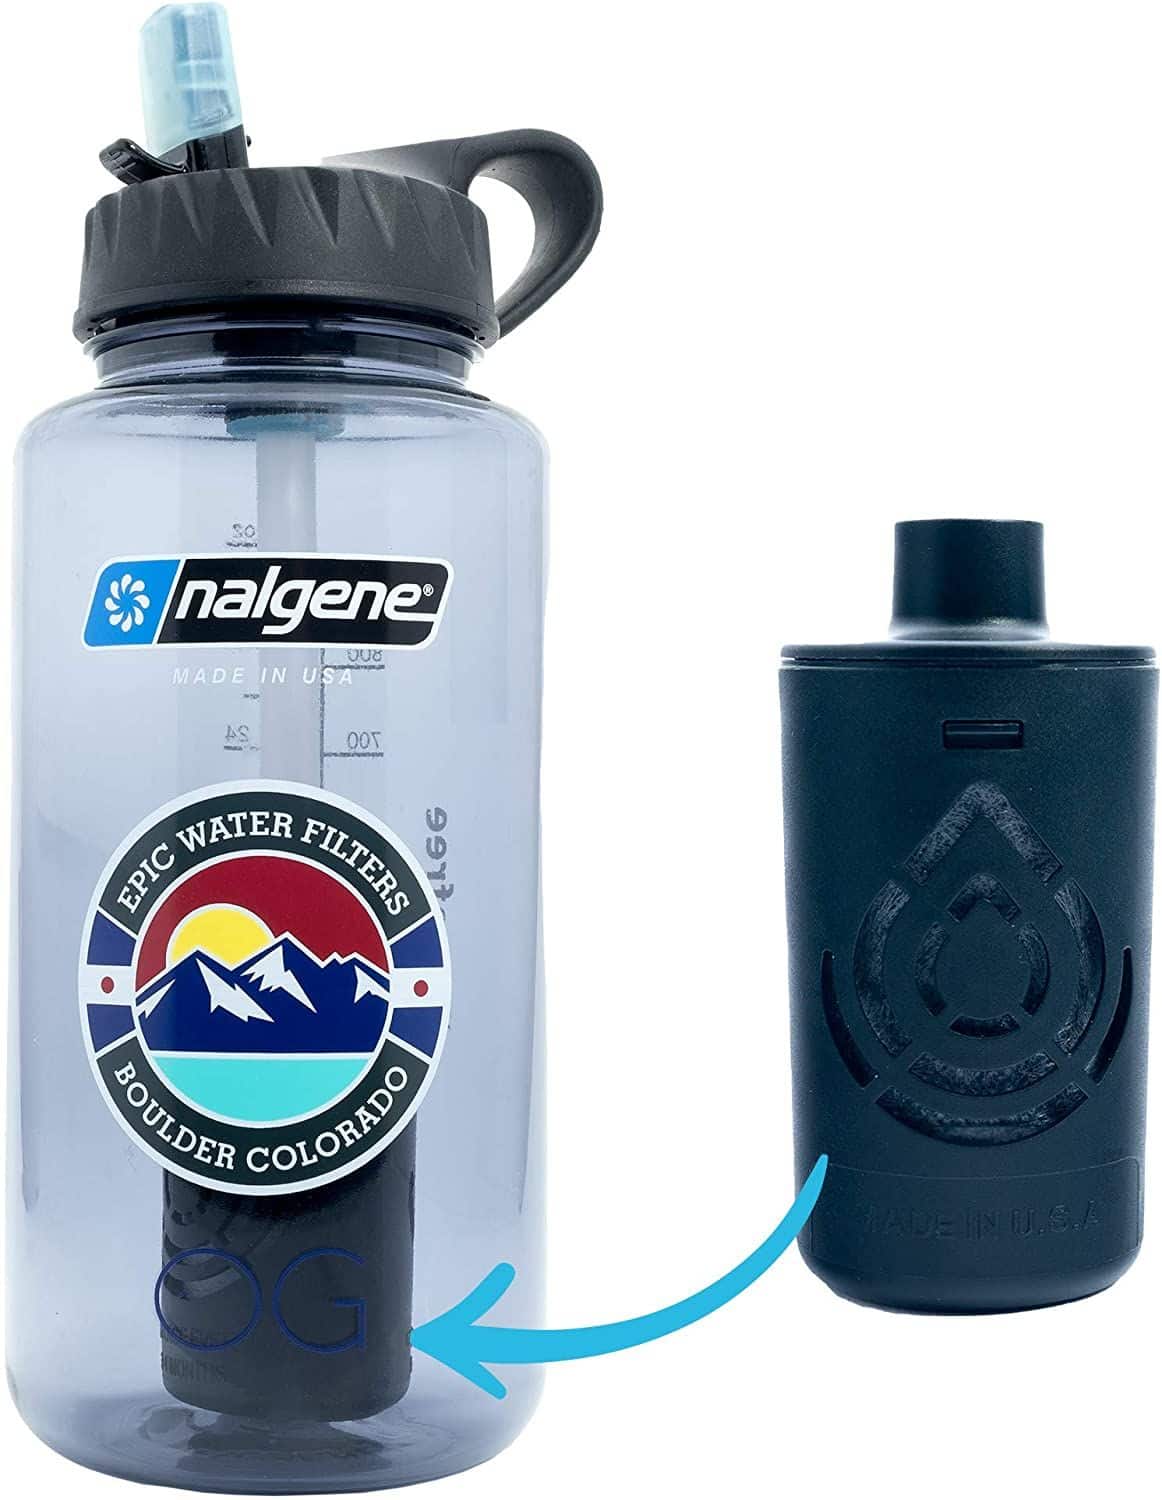 Nalgene travel water filter